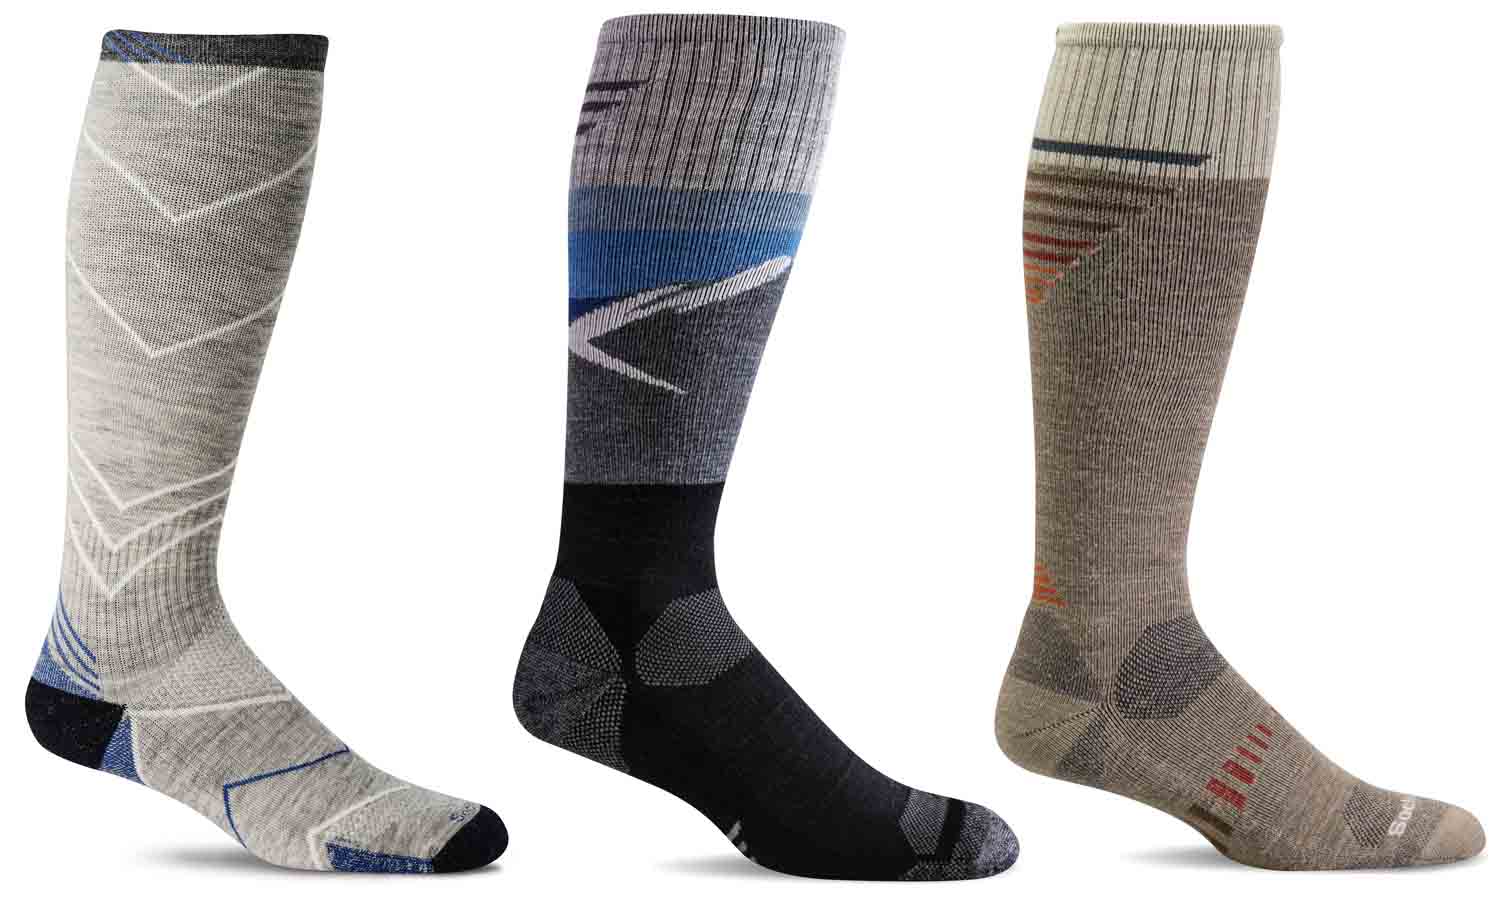 sockwell moderate graduate compression socks